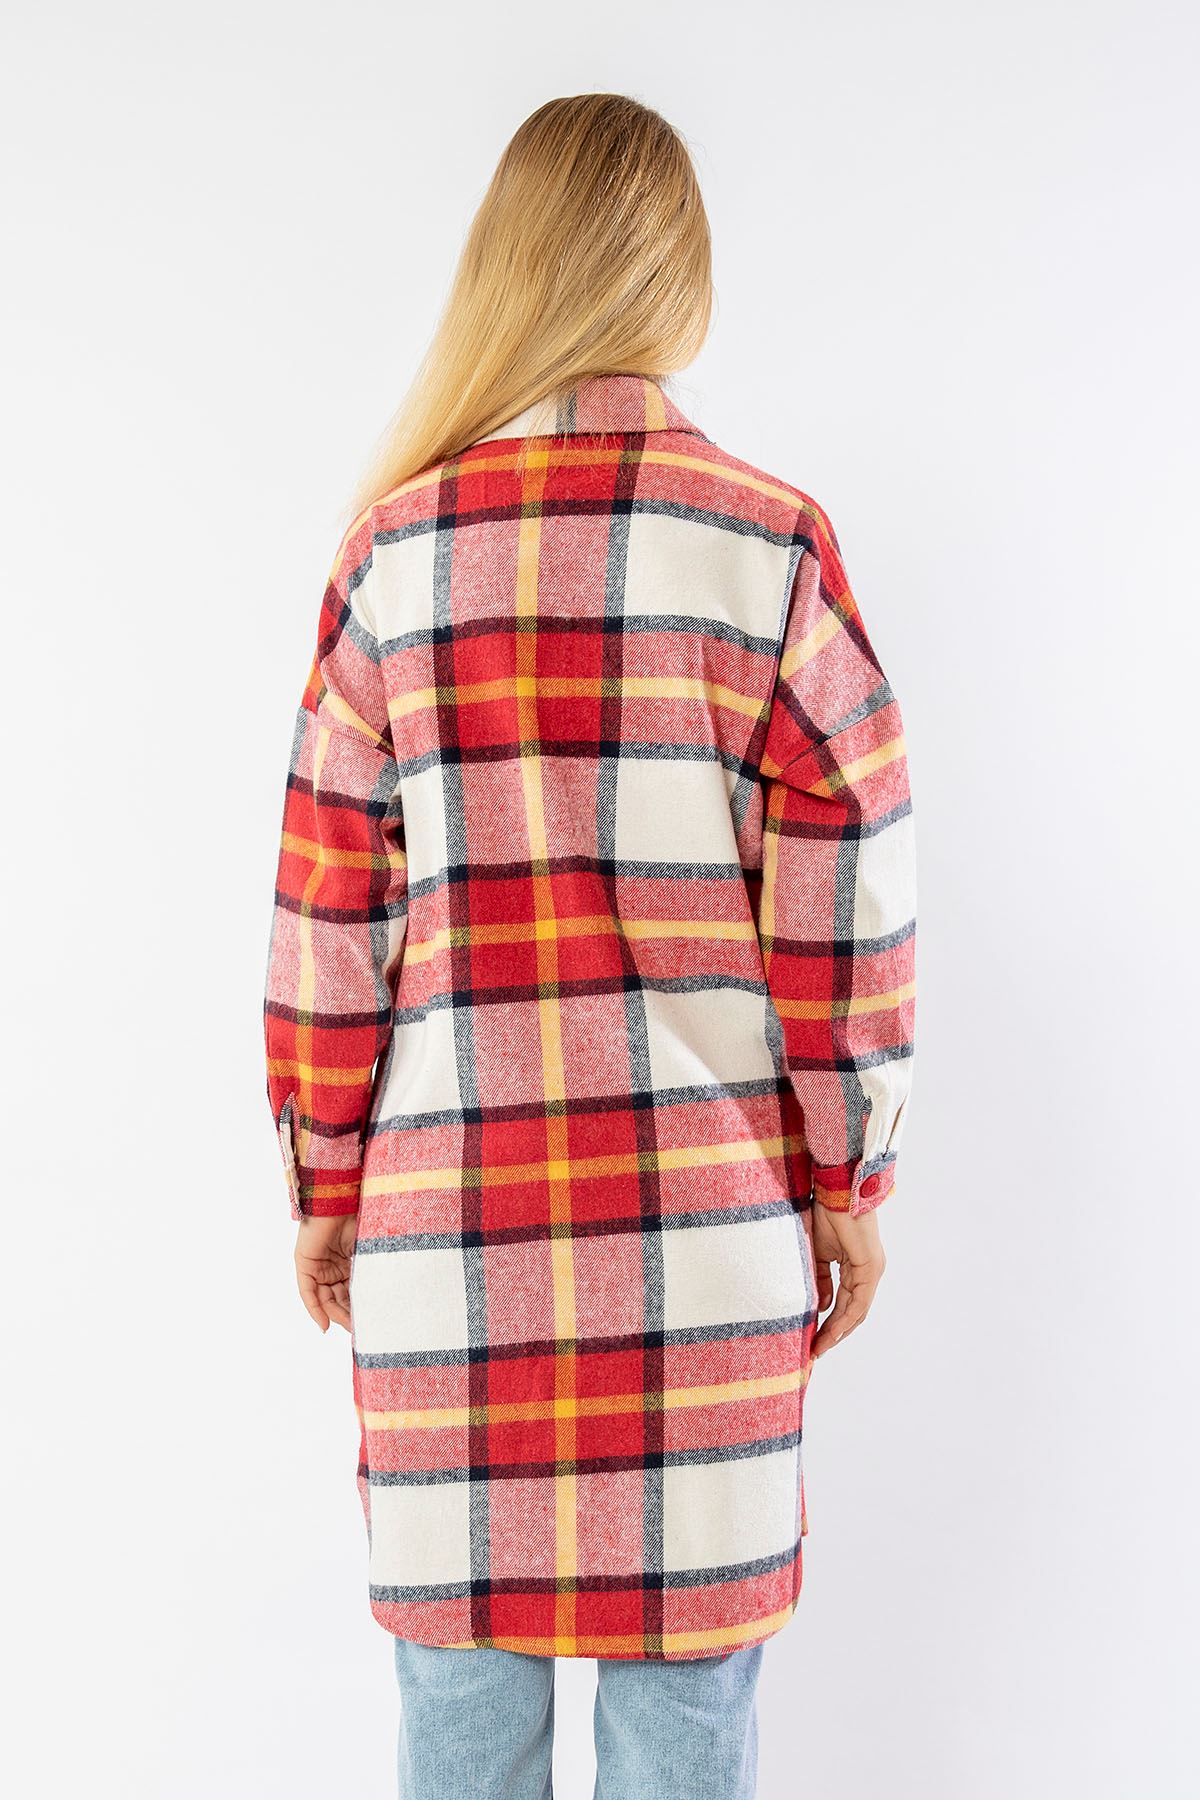 Lumberjack Fabric Long Sleeve Above Knee Oversize Plaid Women'S Shirt - Red